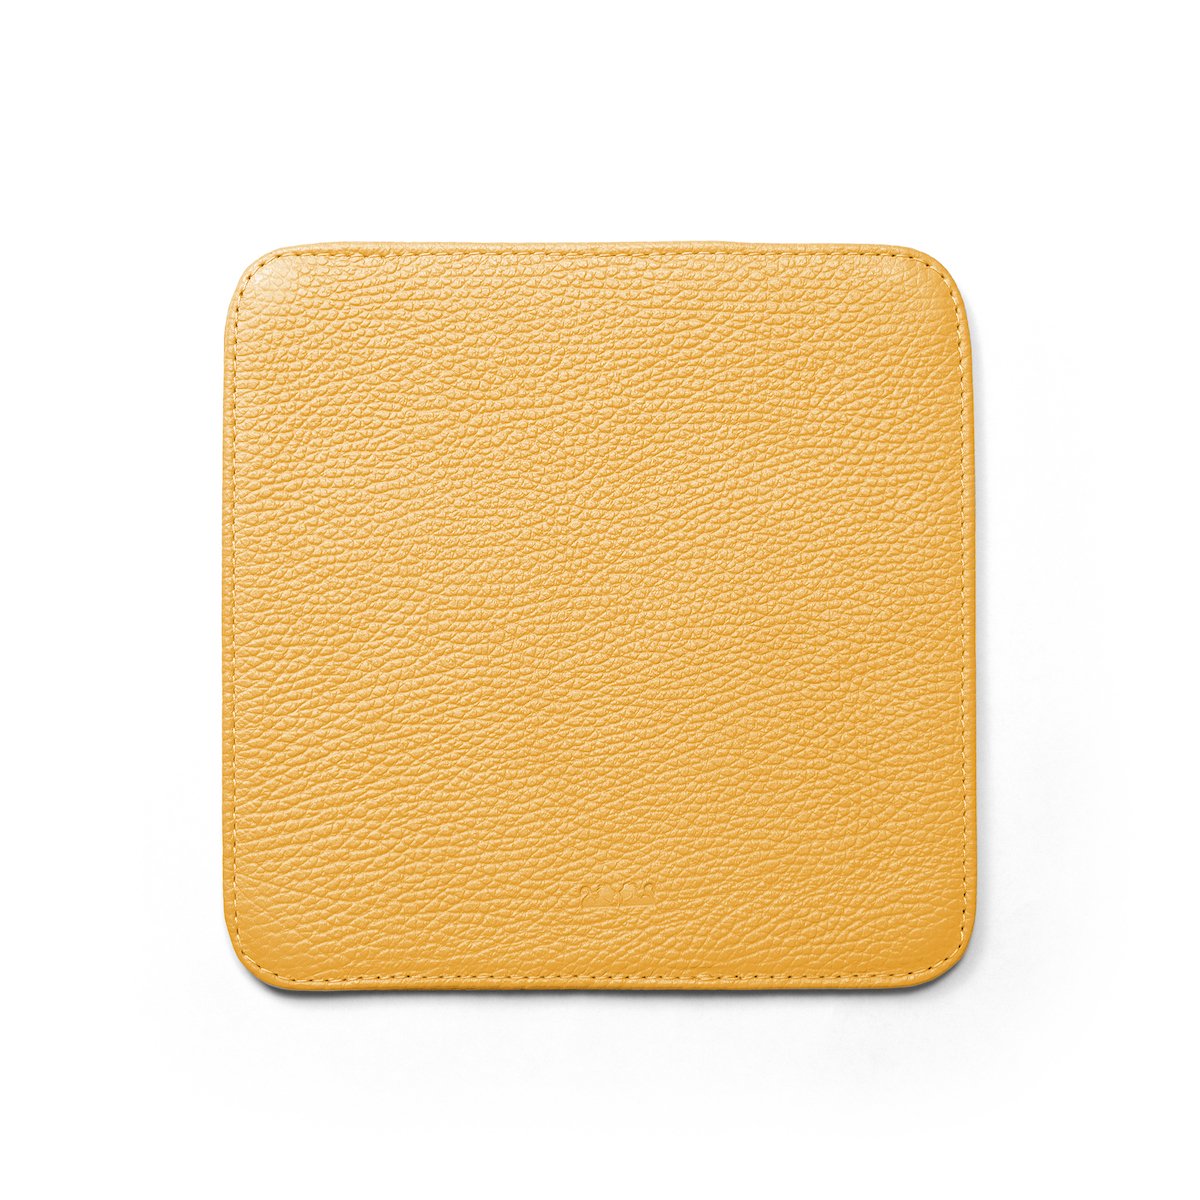 mousepad-square-floater-amarelo-1